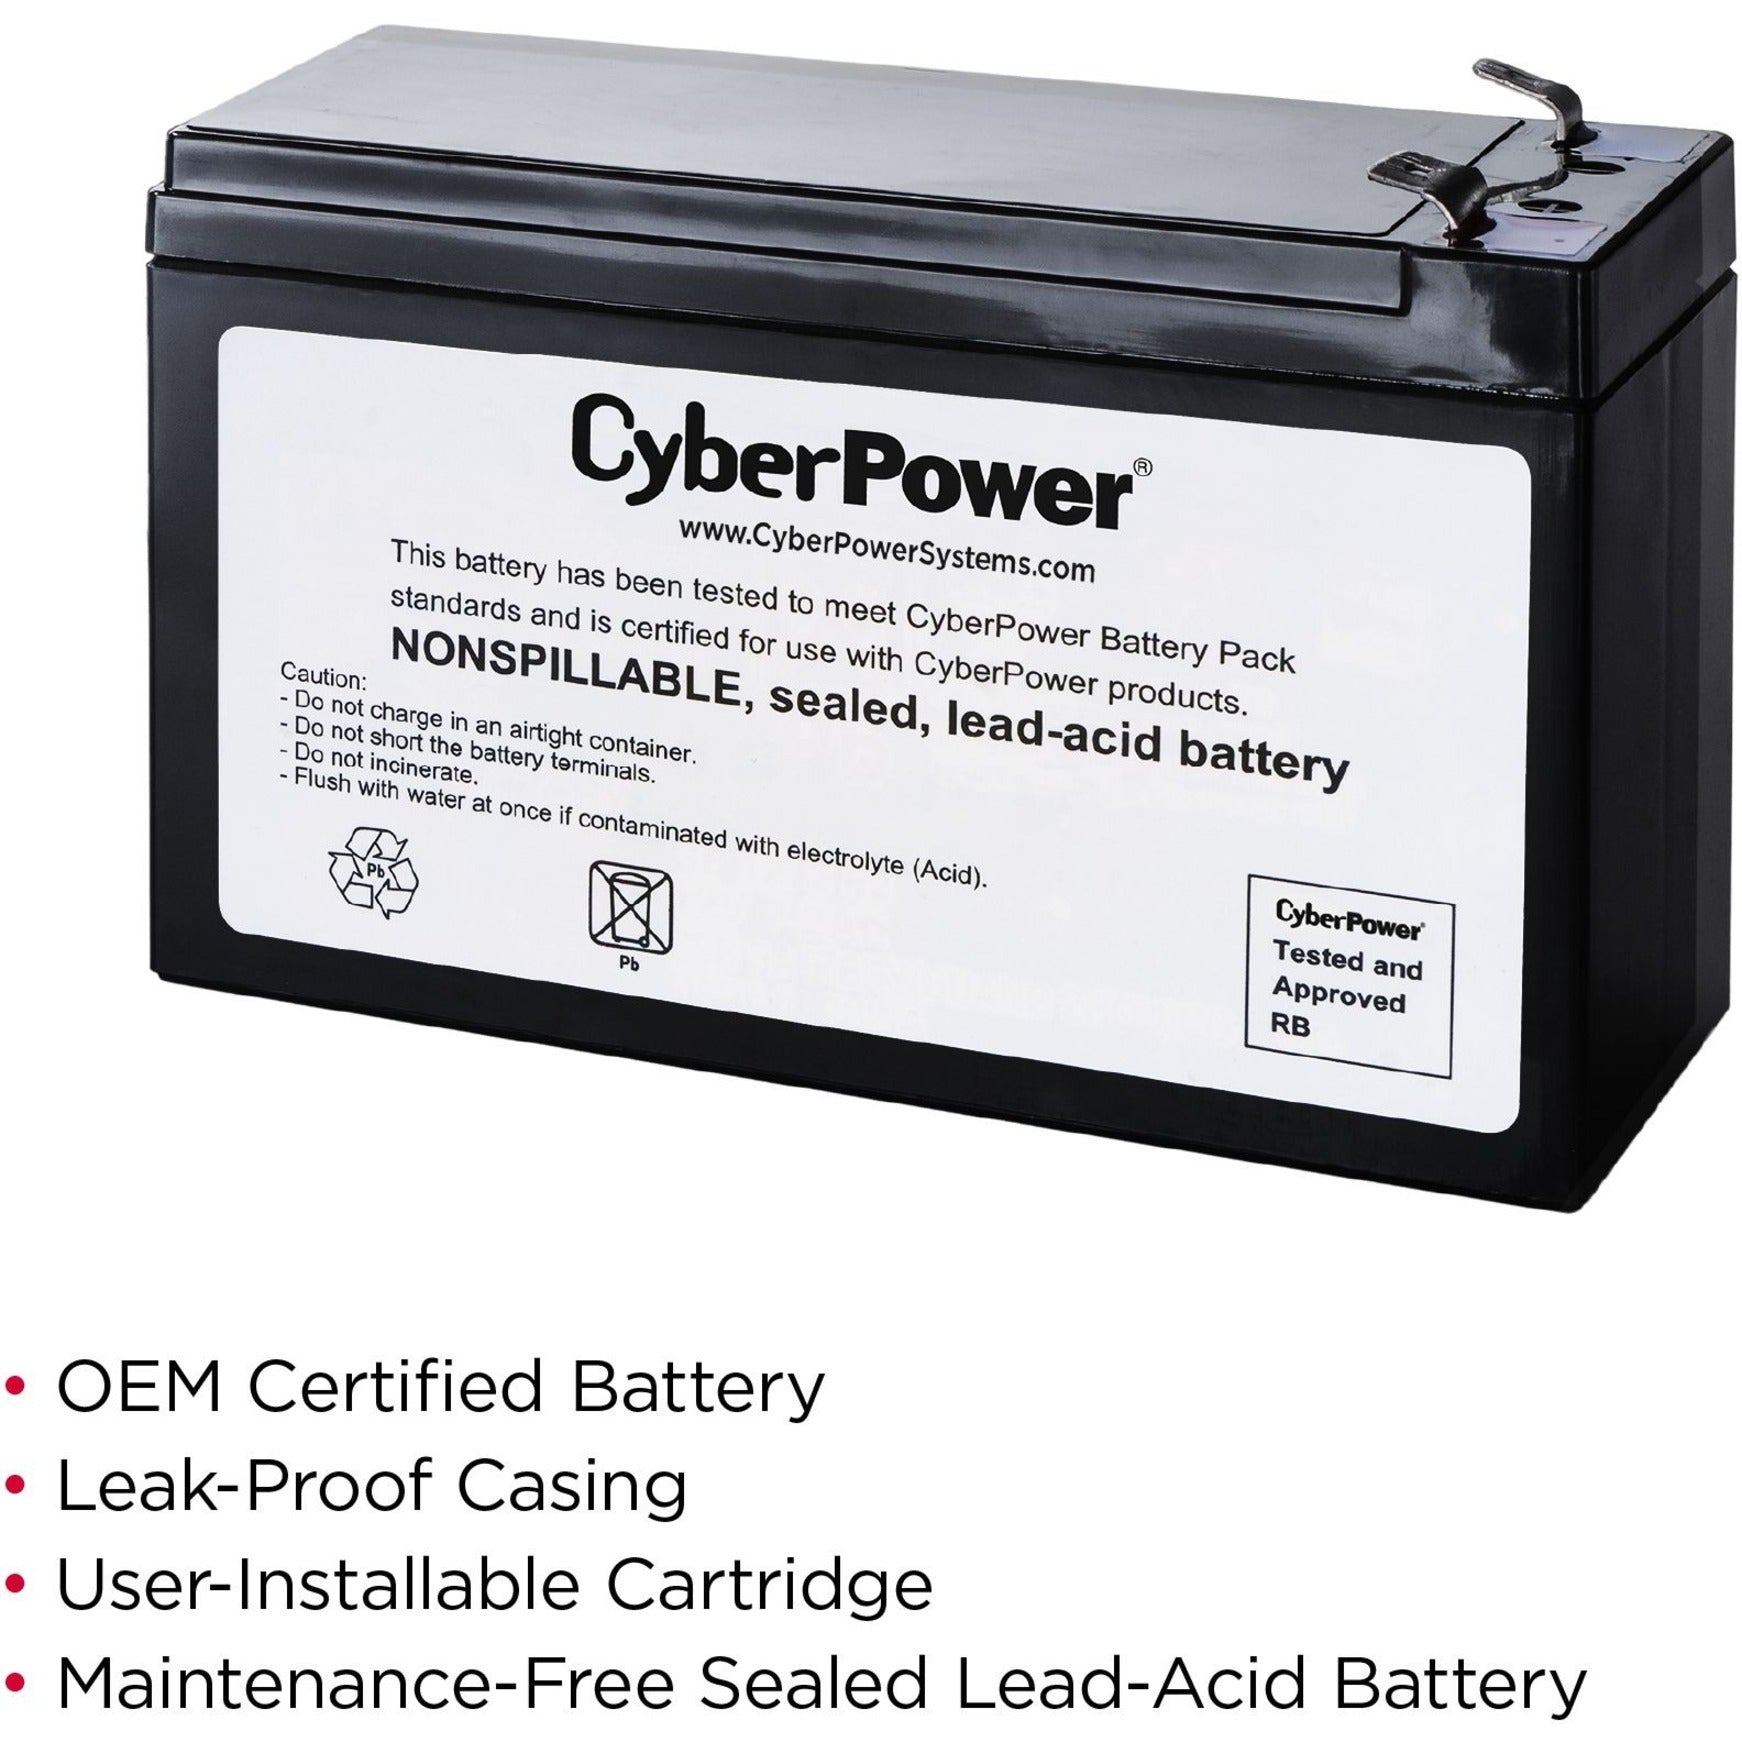 CyberPower RB1280A UPS Erstatningsbatteripatron 18 måneders garanti 8000mAh blysyre